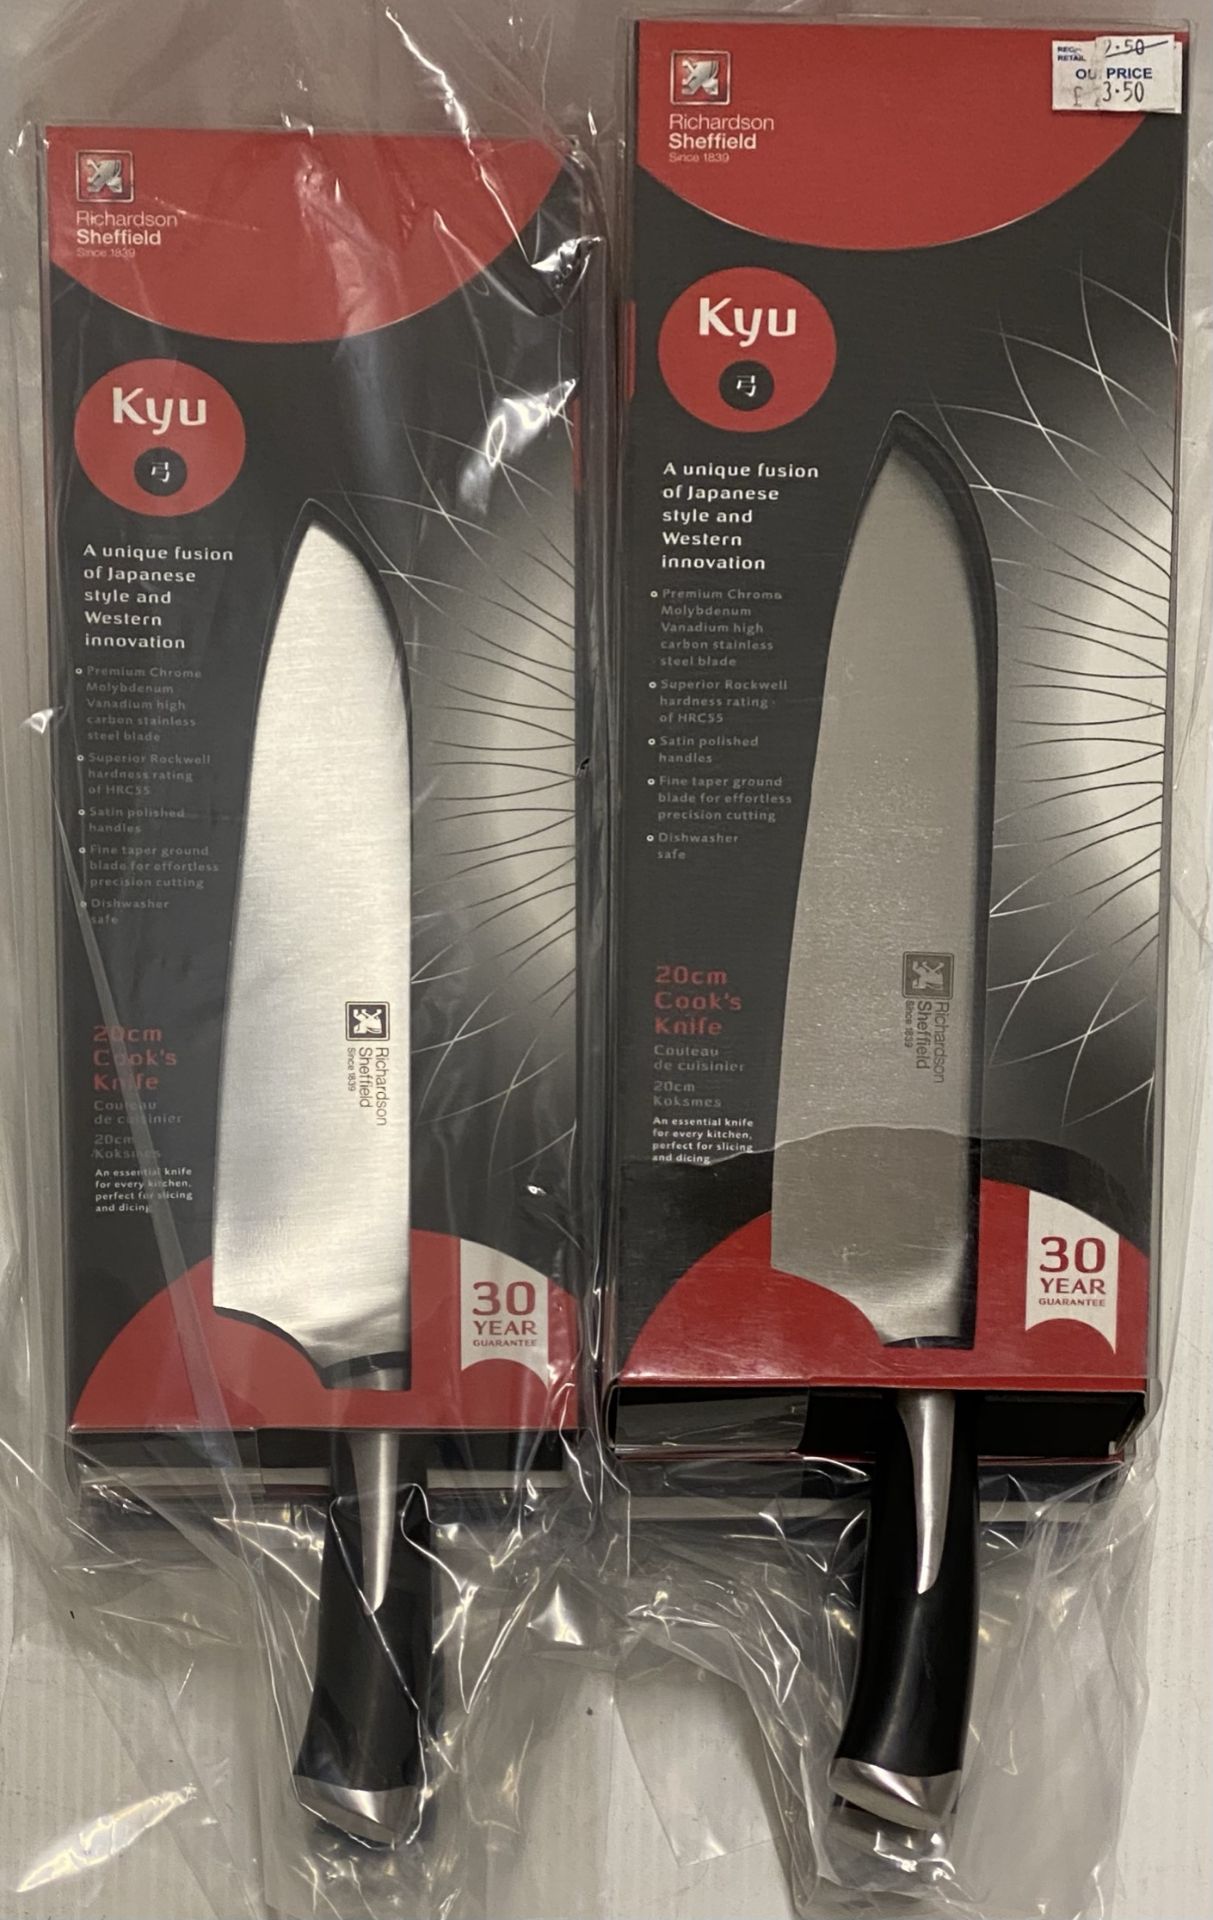 8 x Richardson Sheffield Kyu 20cm Cook's knives - RRP £29.